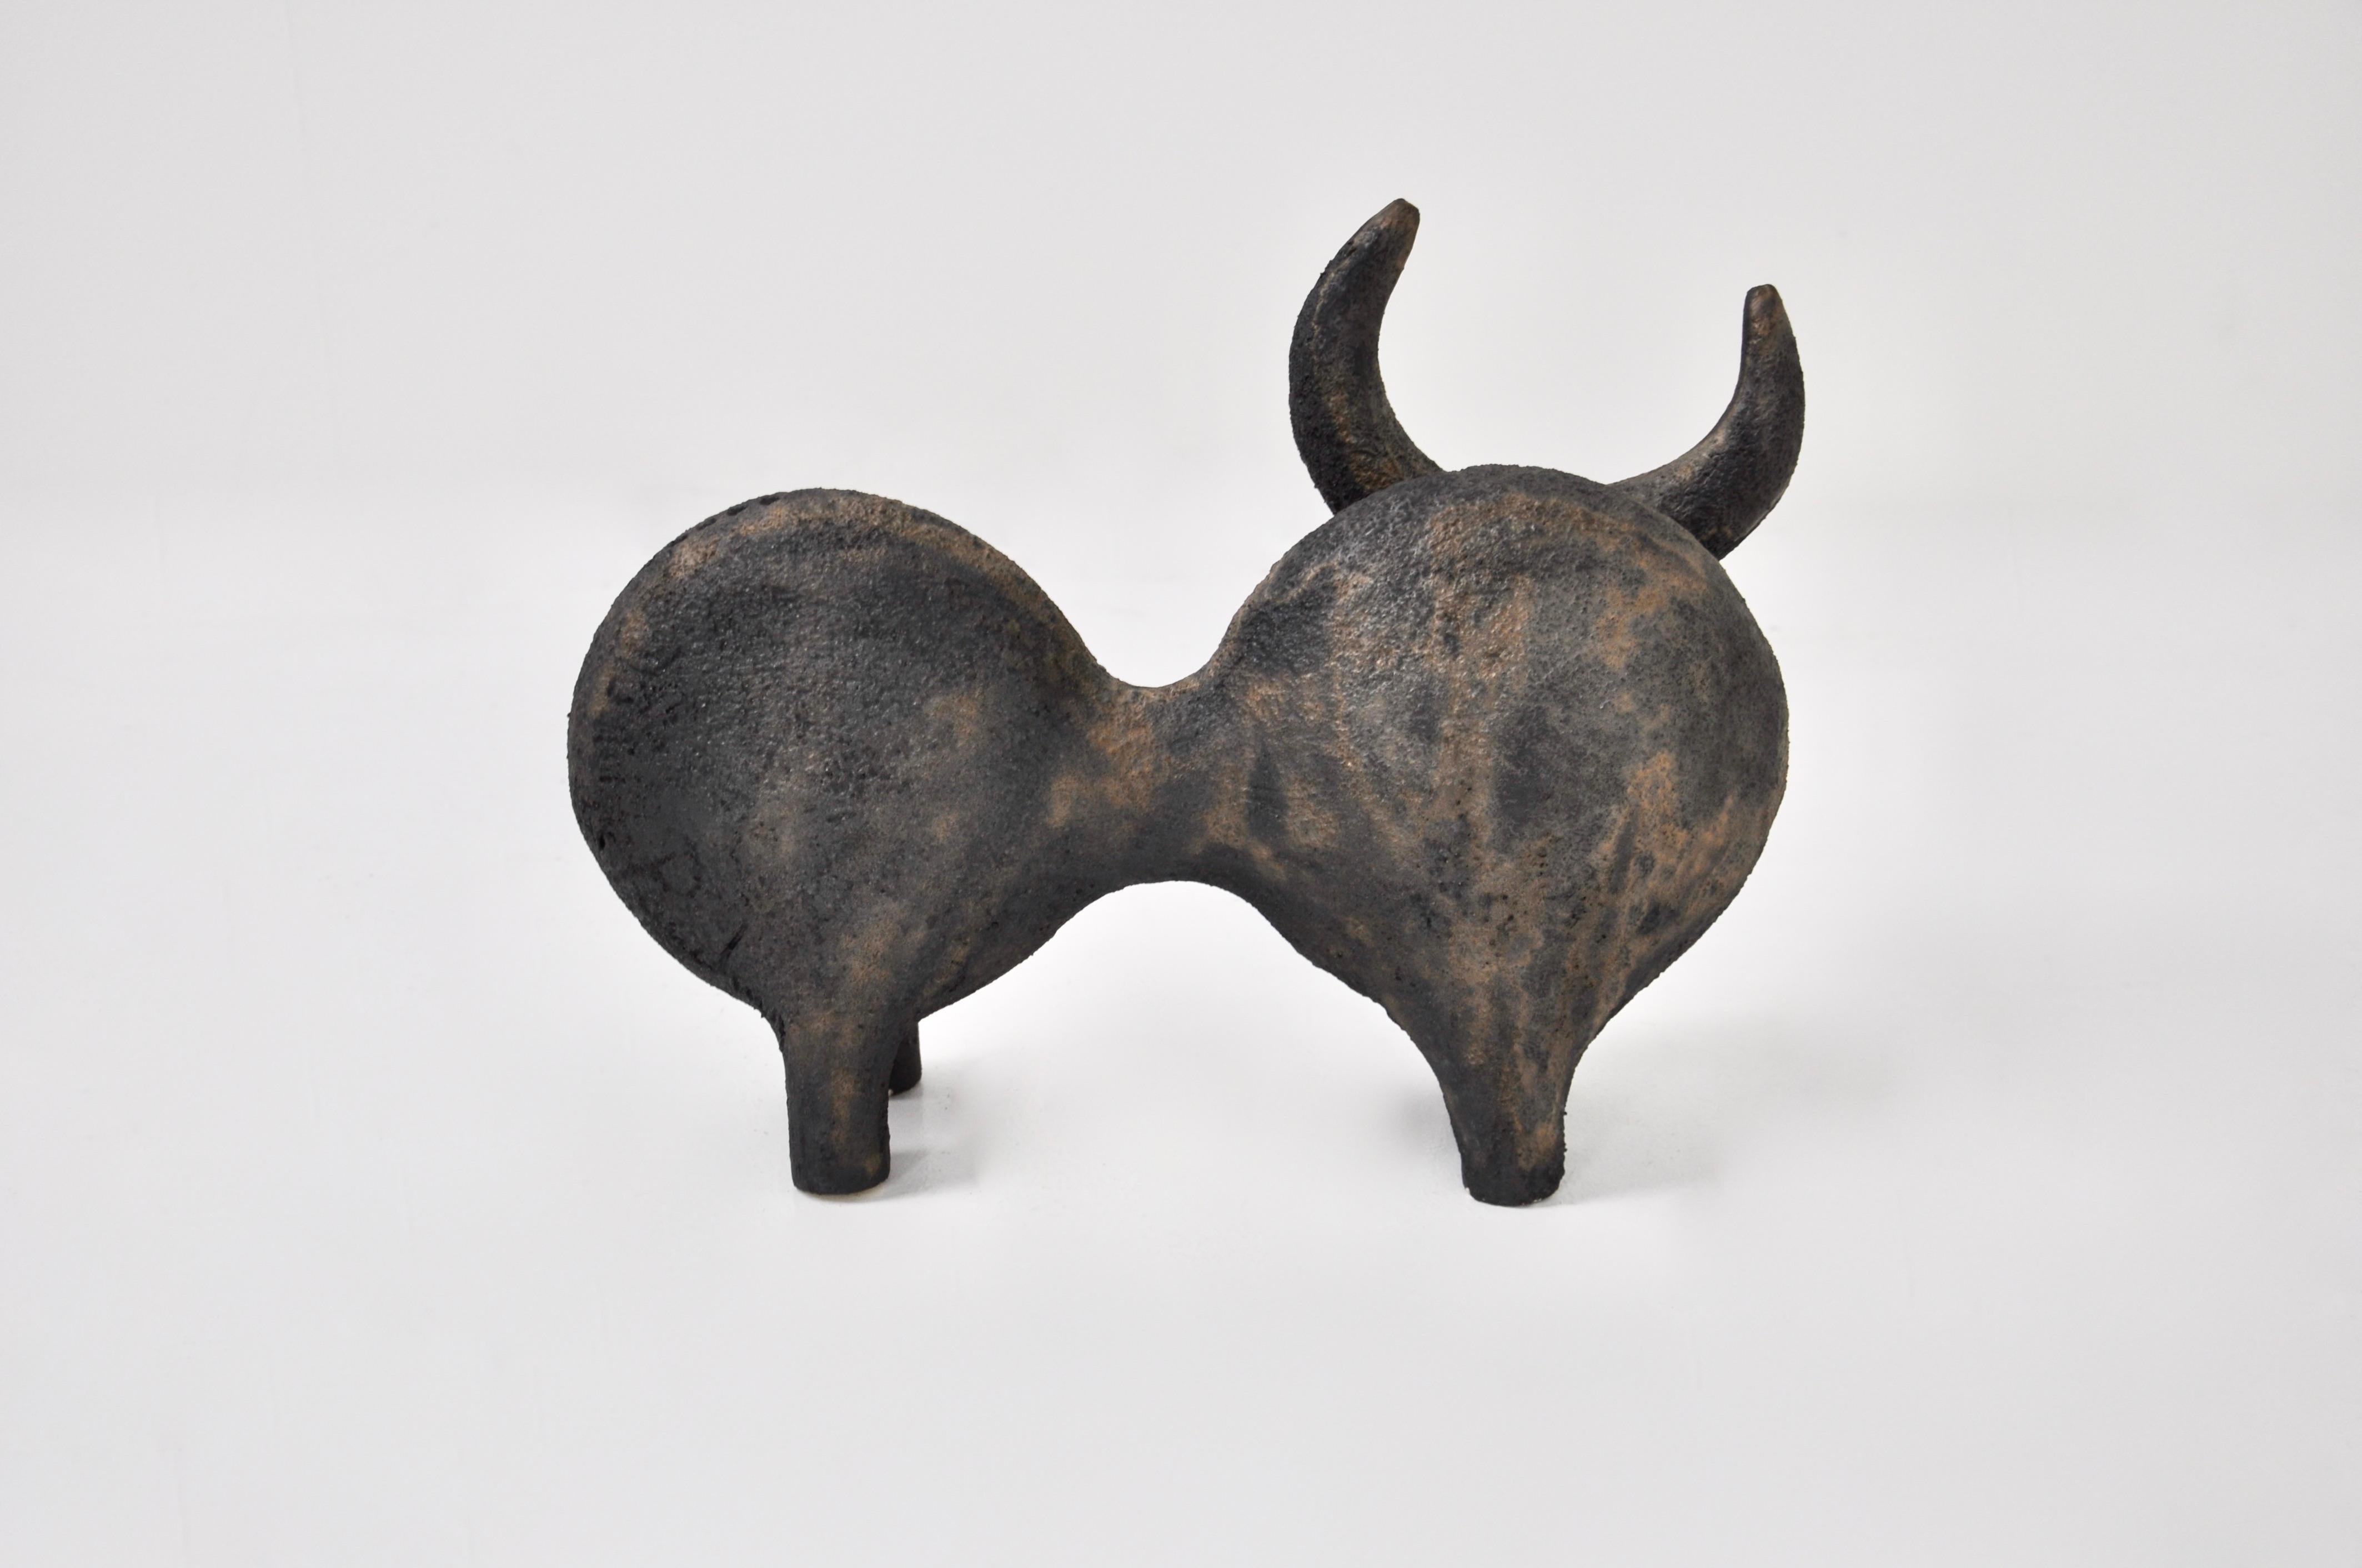 French Bull Ceramic by Dominique Pouchain